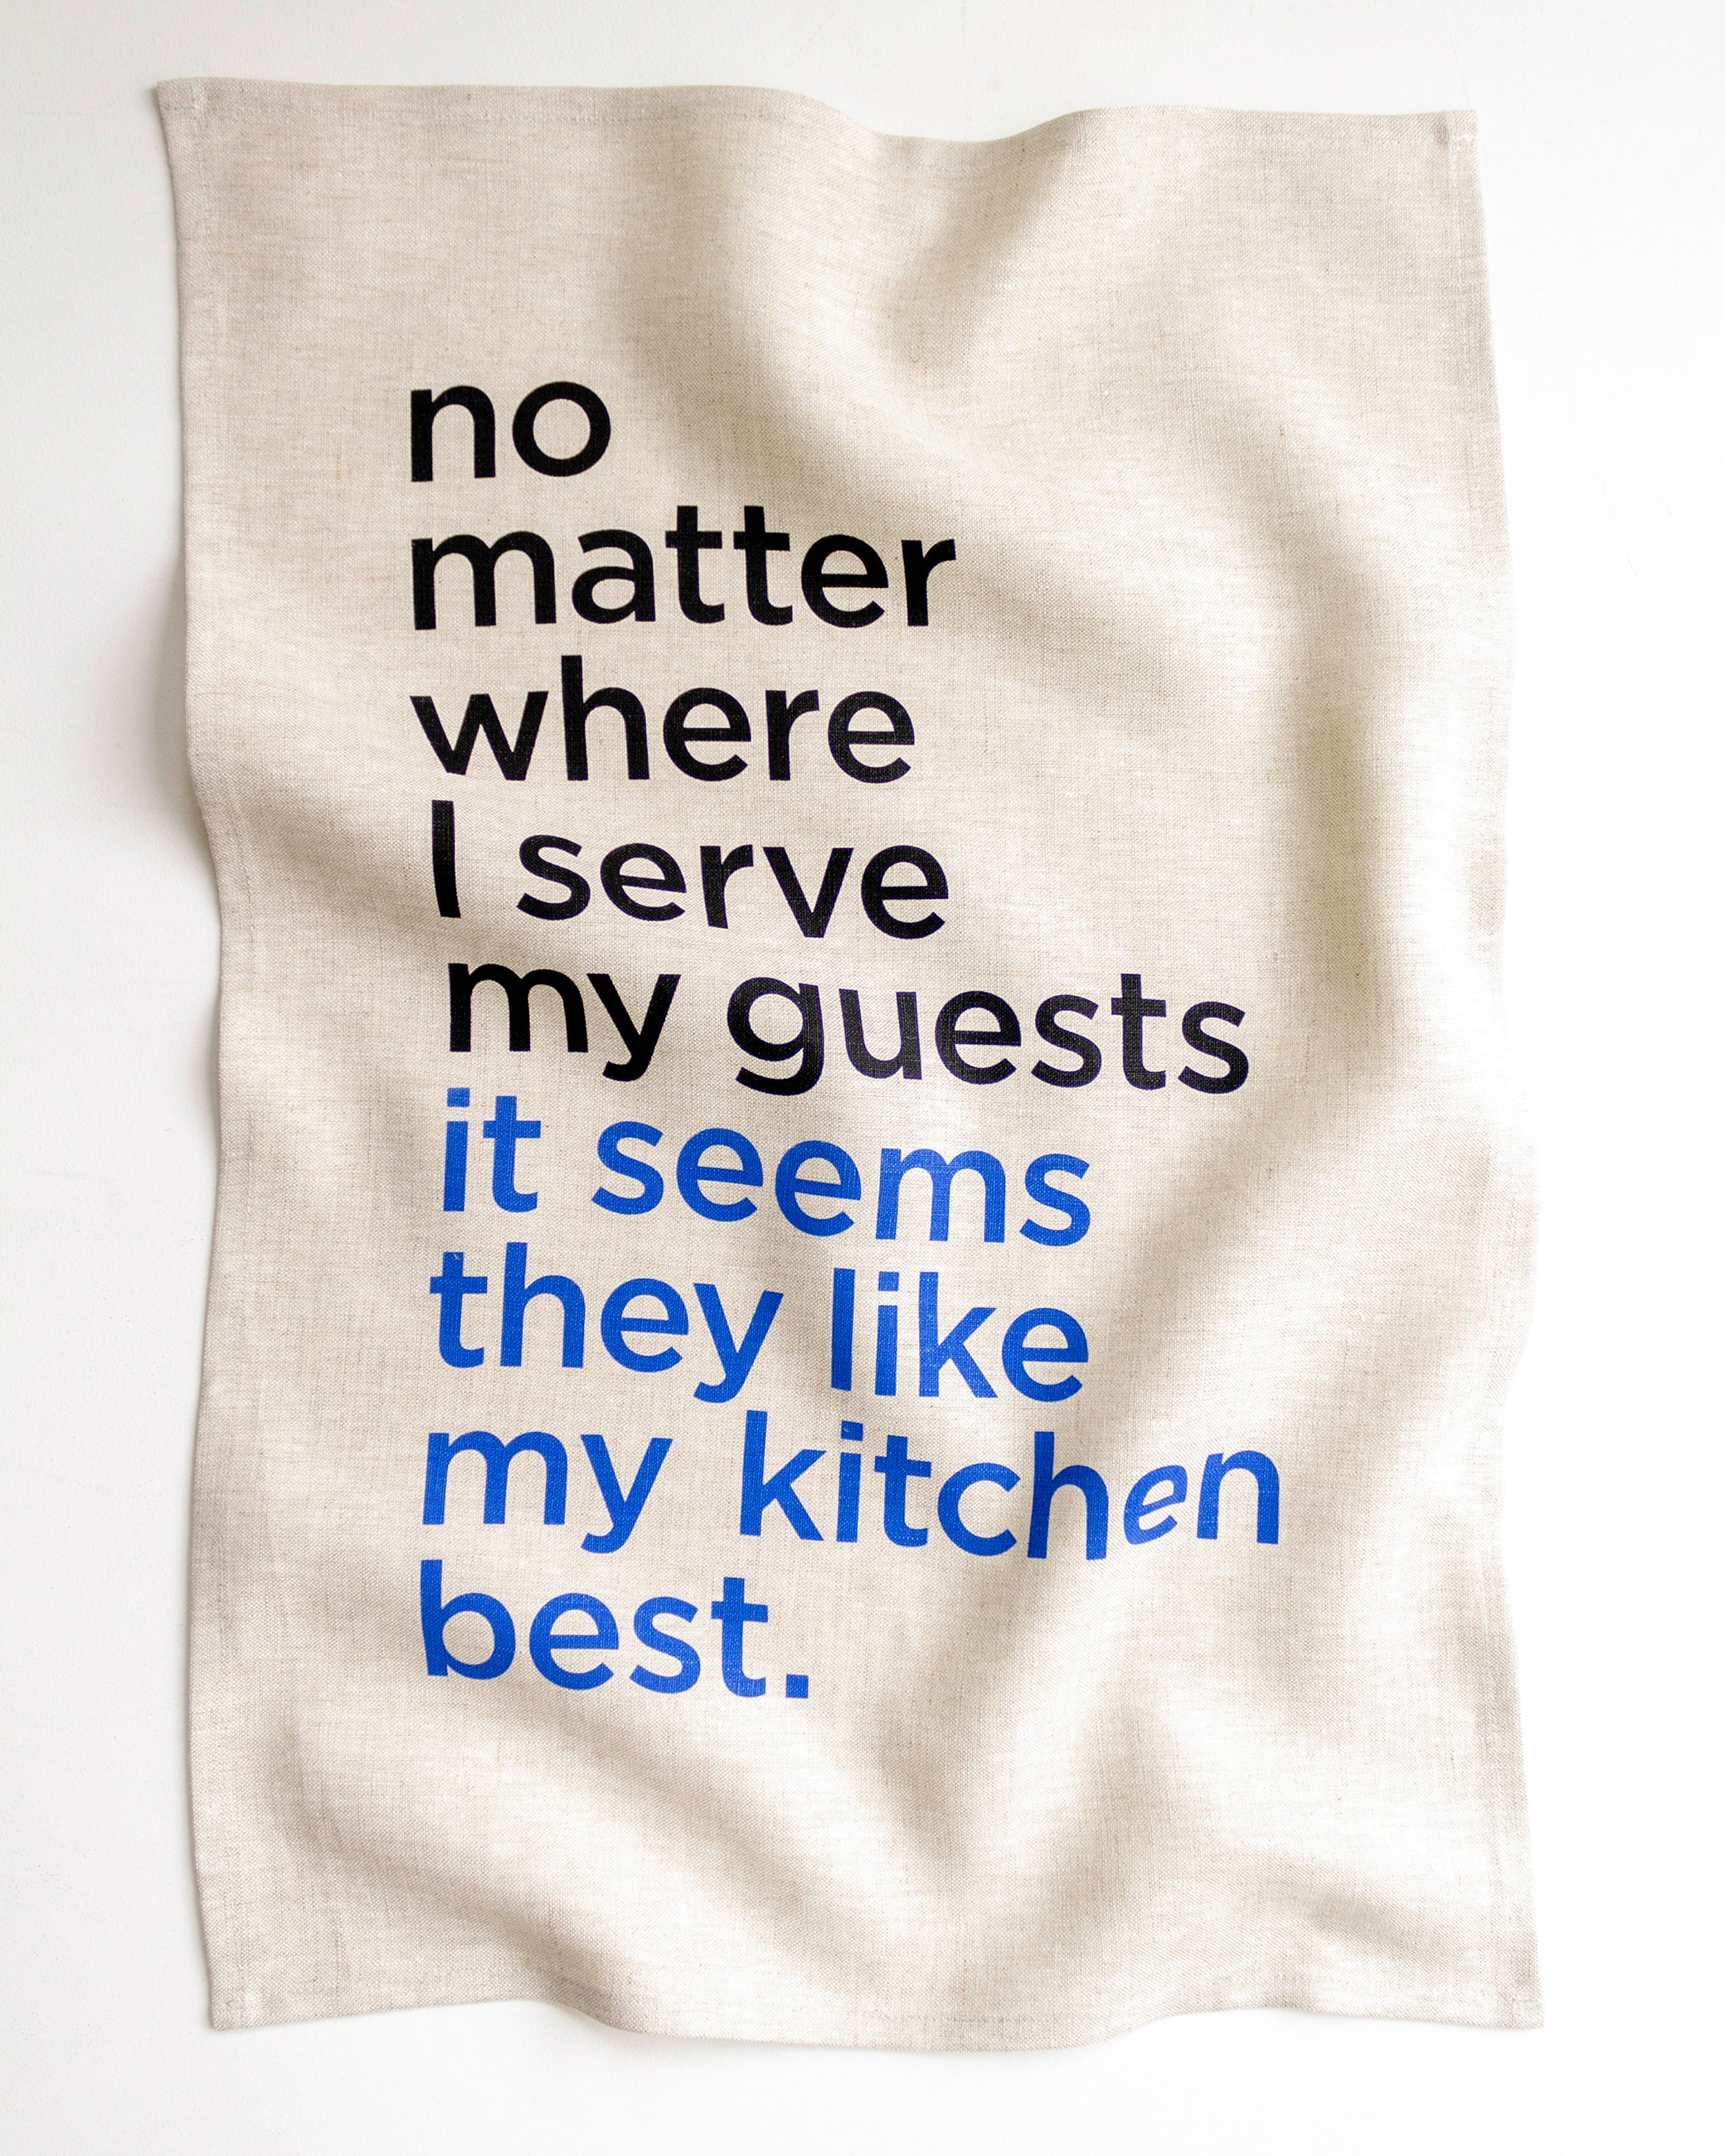 Mixed Flat & Terry Kitchen Towels - 3 Pc Set - Top Notch DFW, LLC